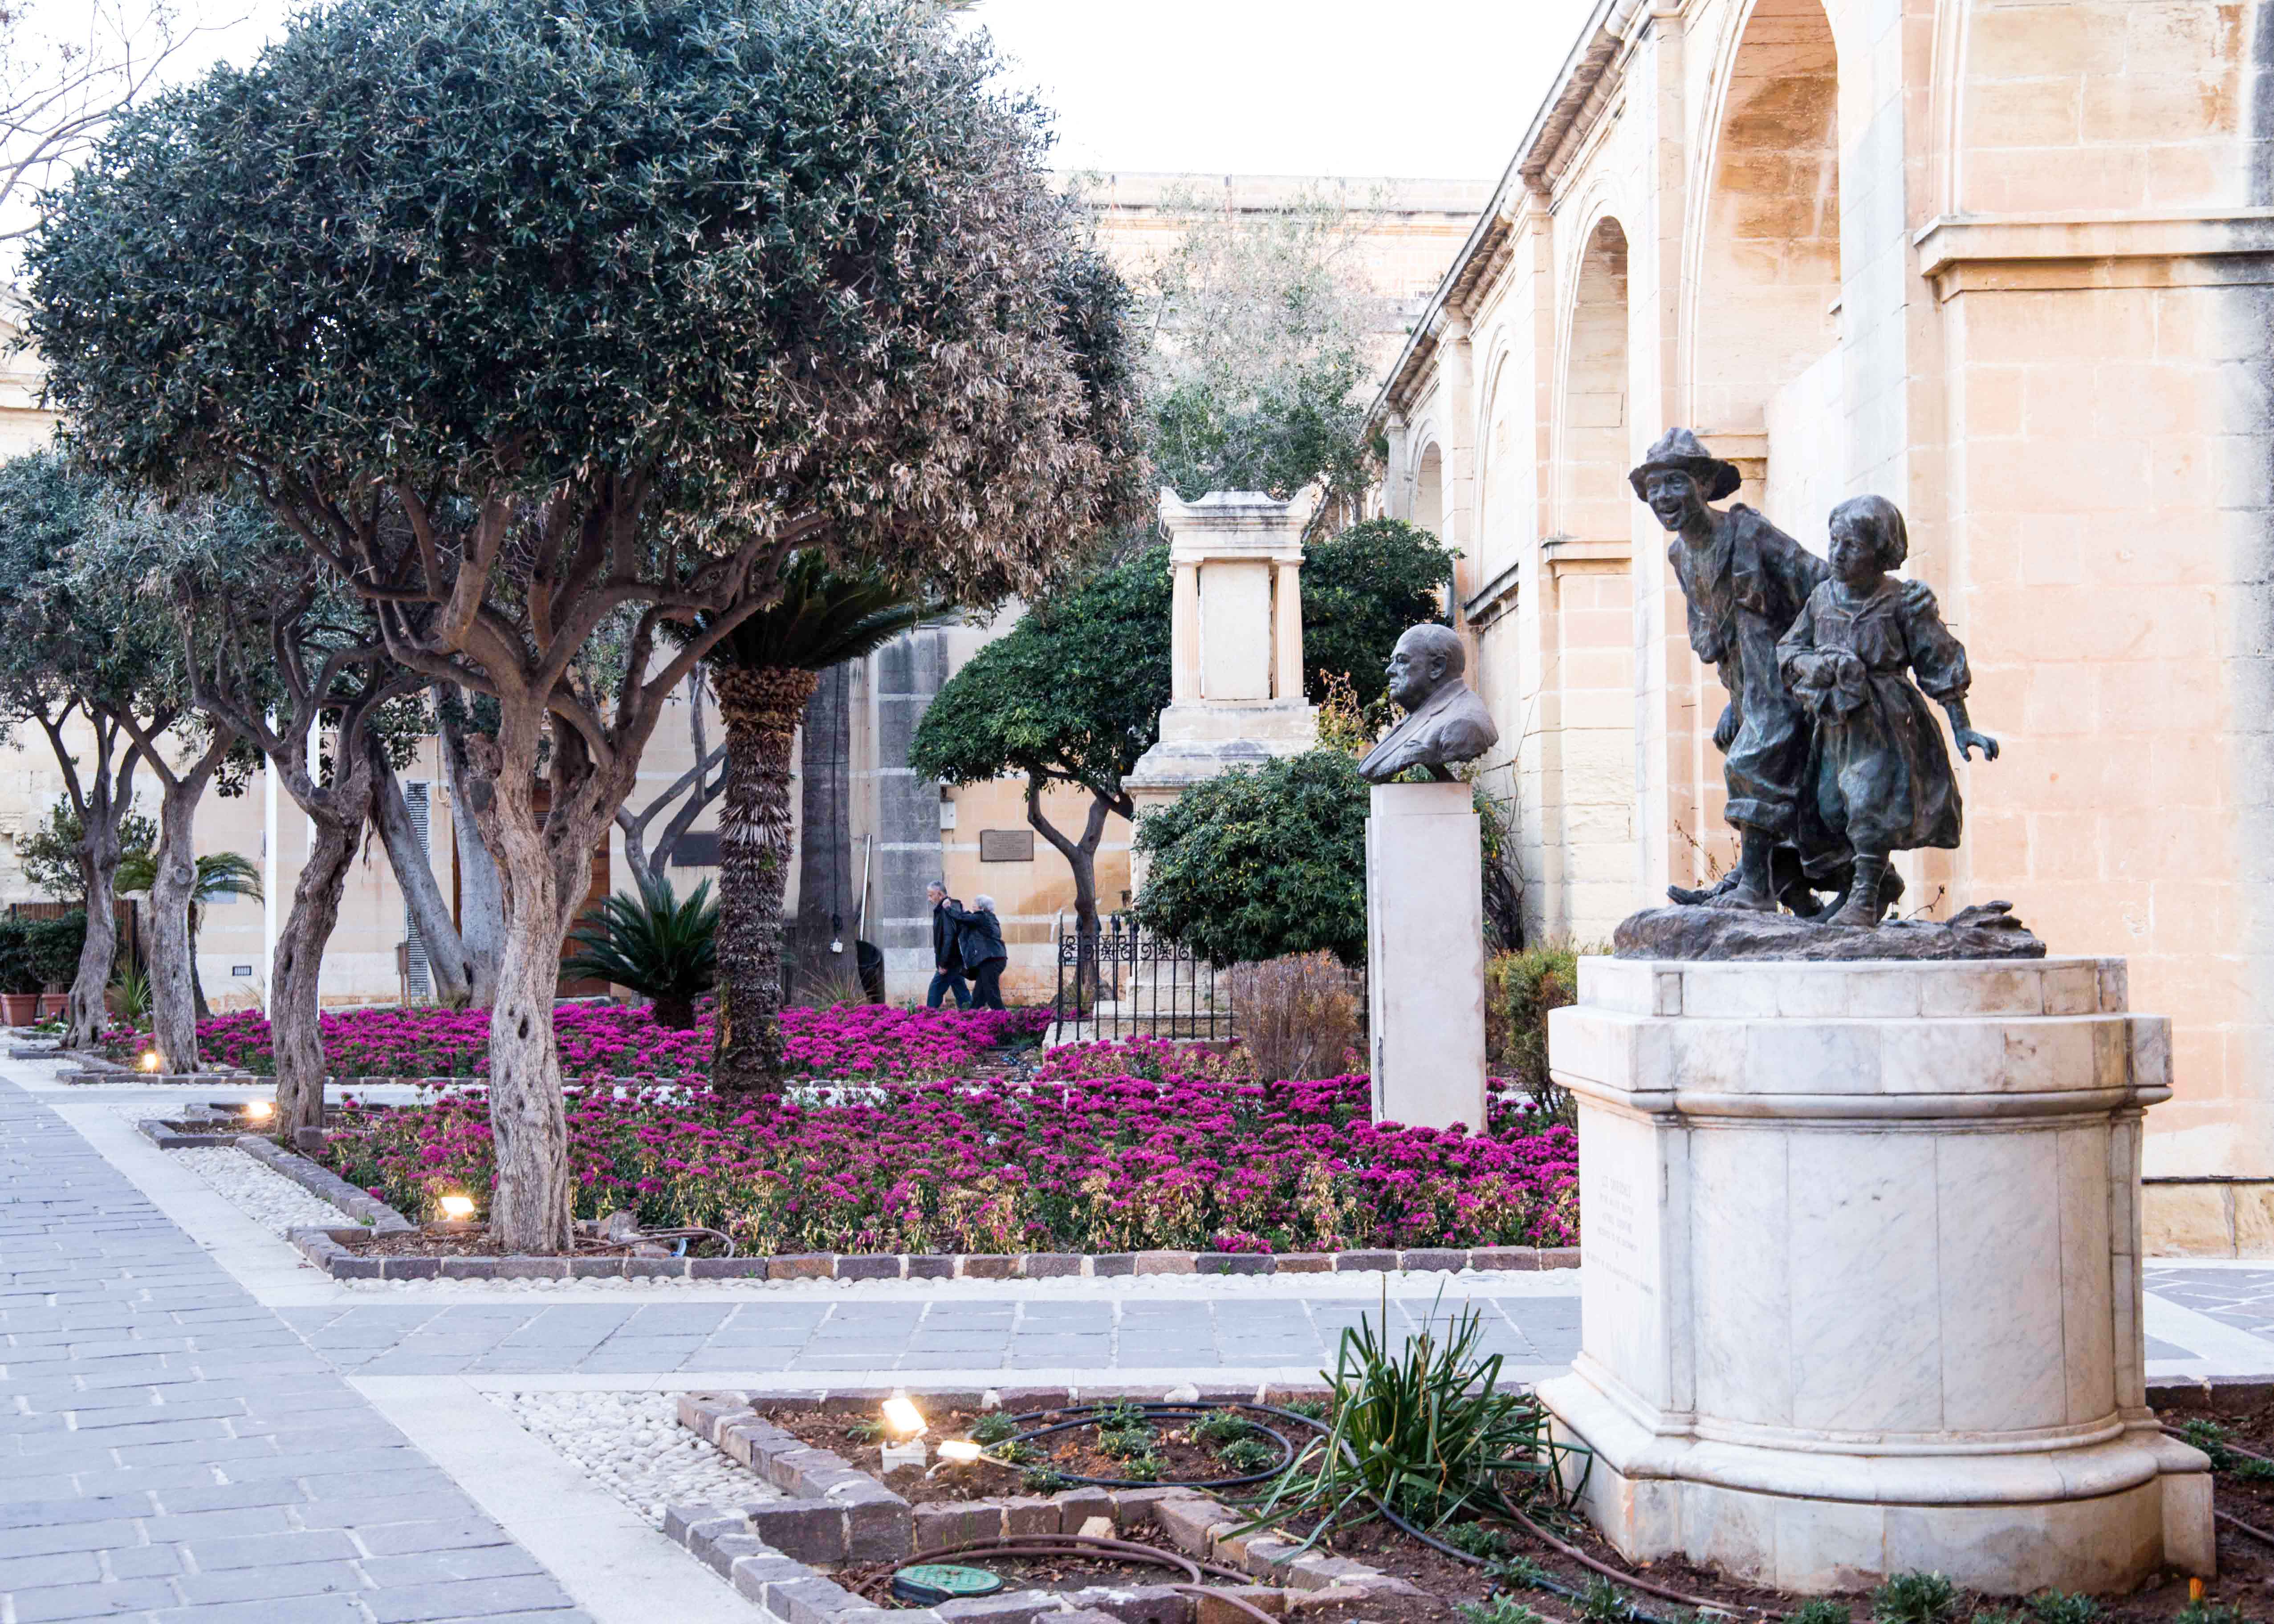 Where to watch the sunset in Malta? Upper Barrakka Gardens